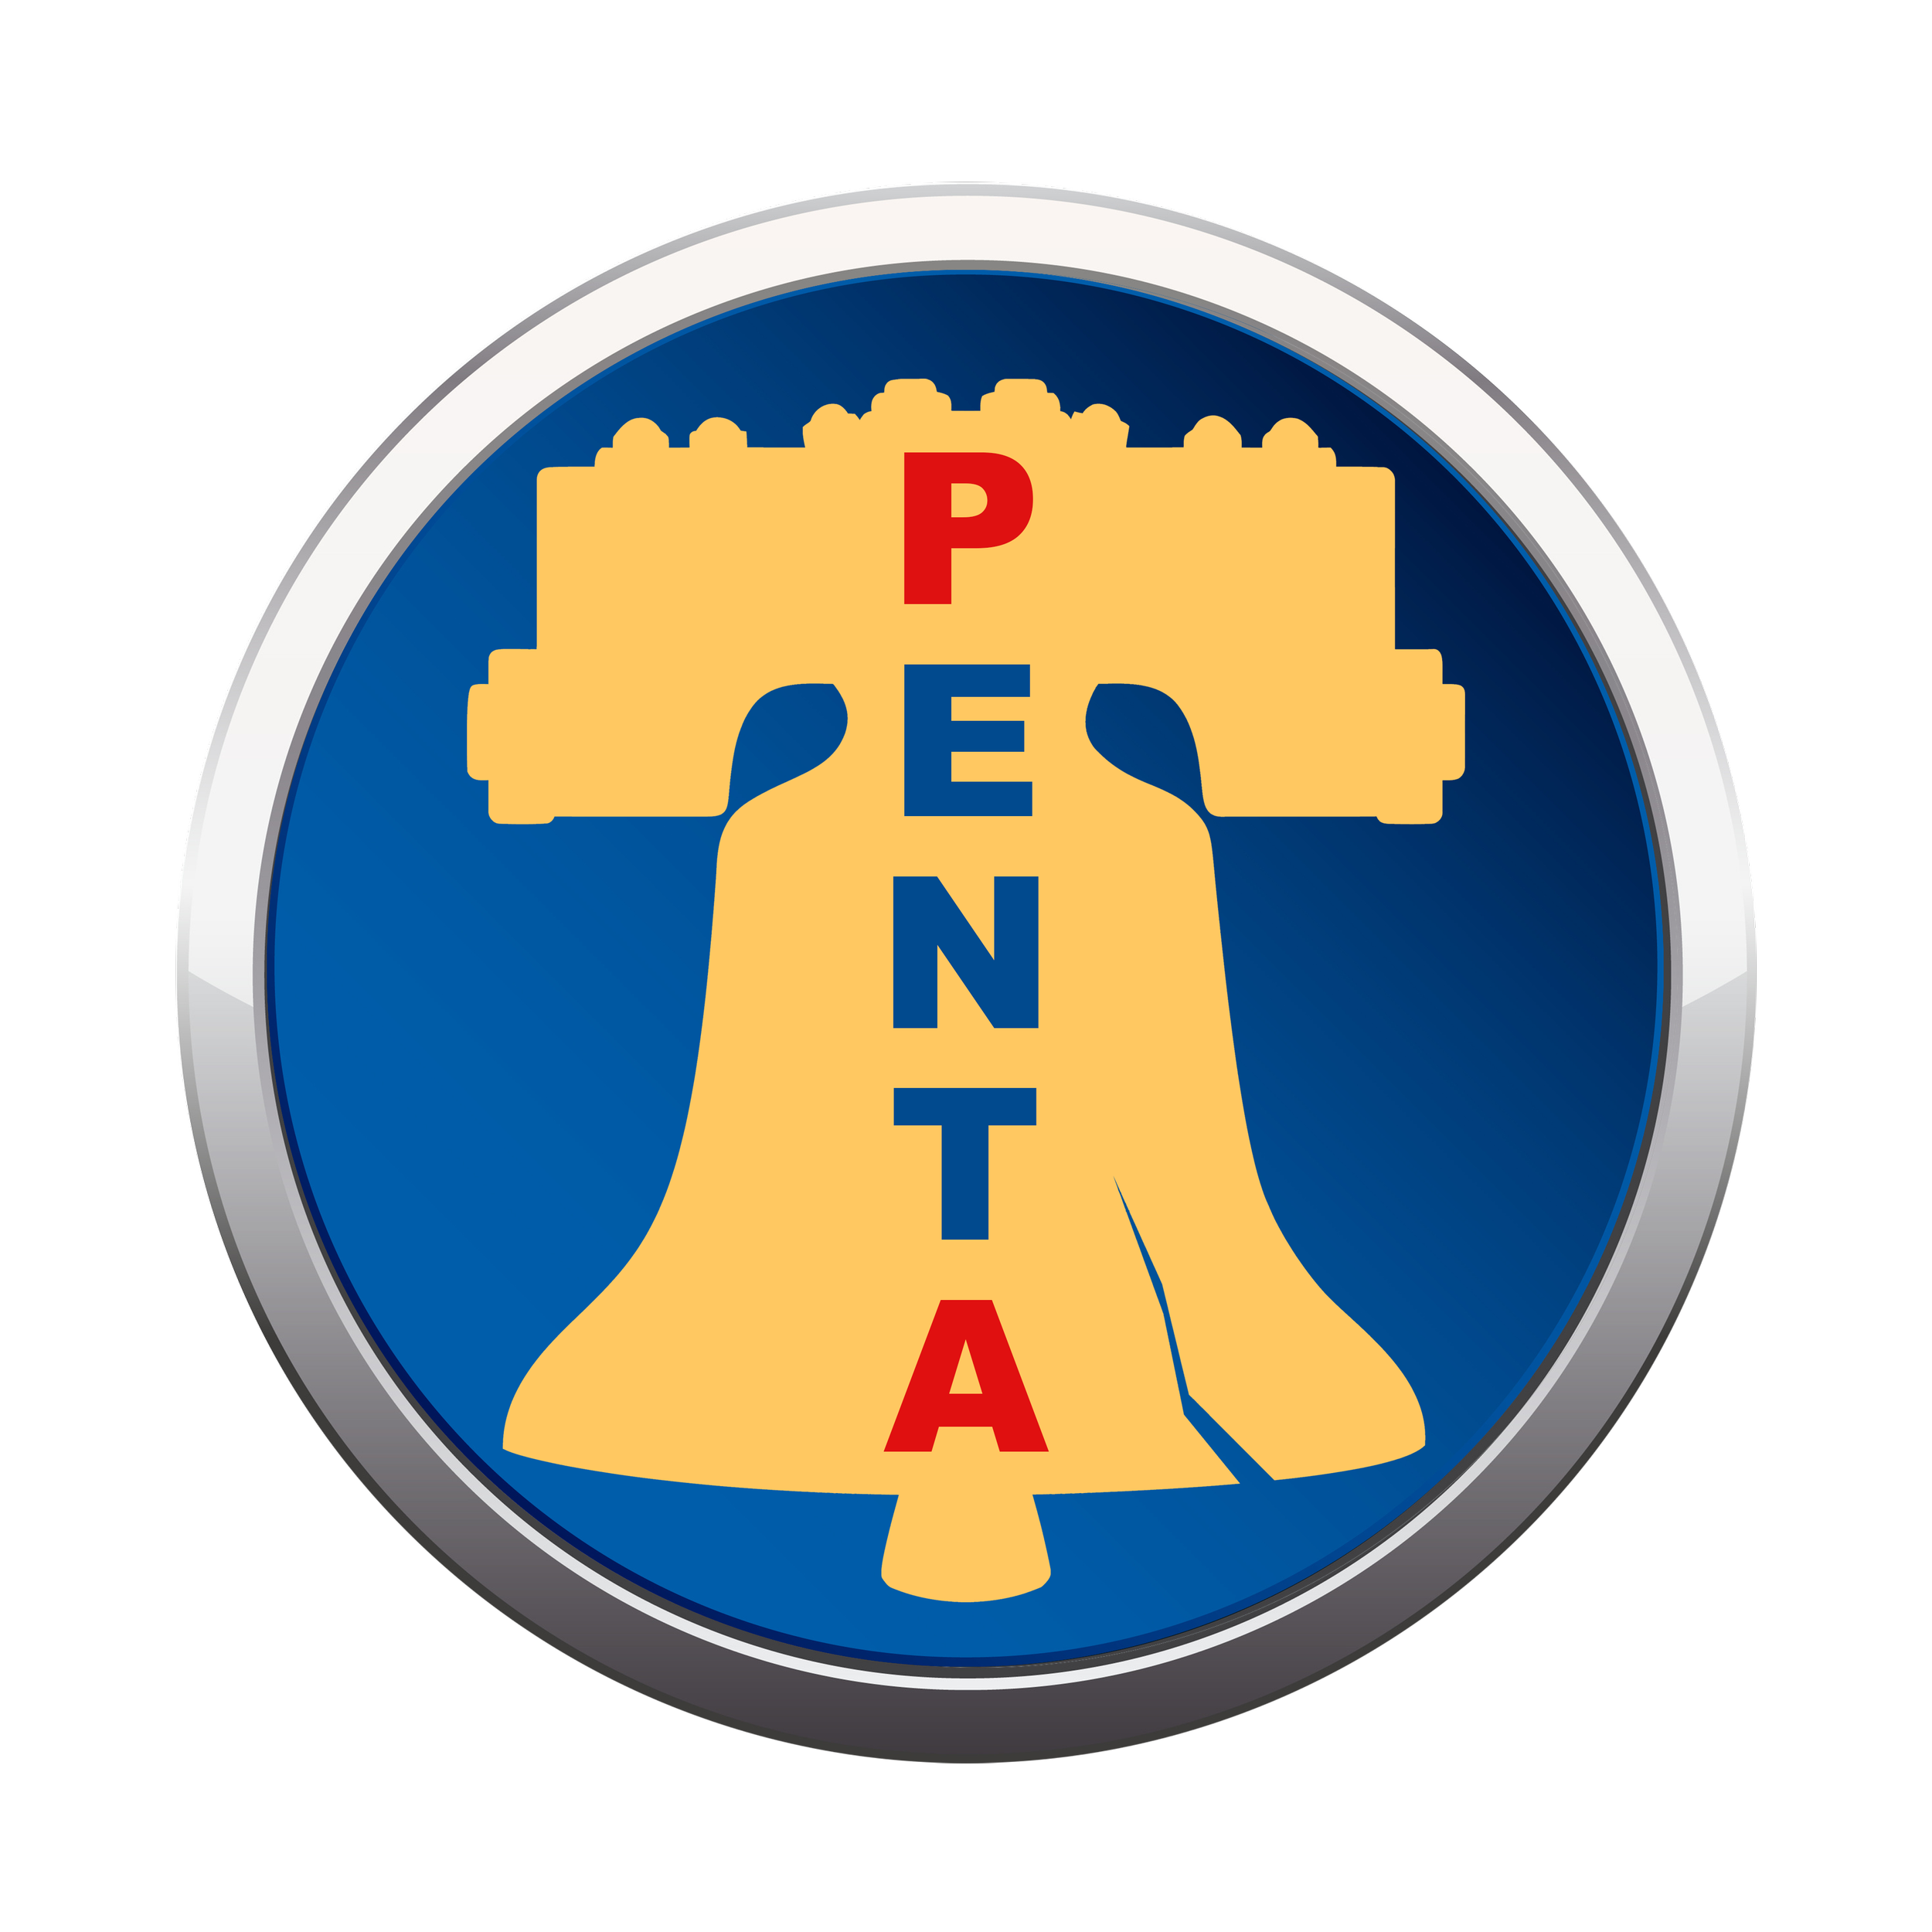 Philadelphia Ear, Nose and Throat Associates: PENTA